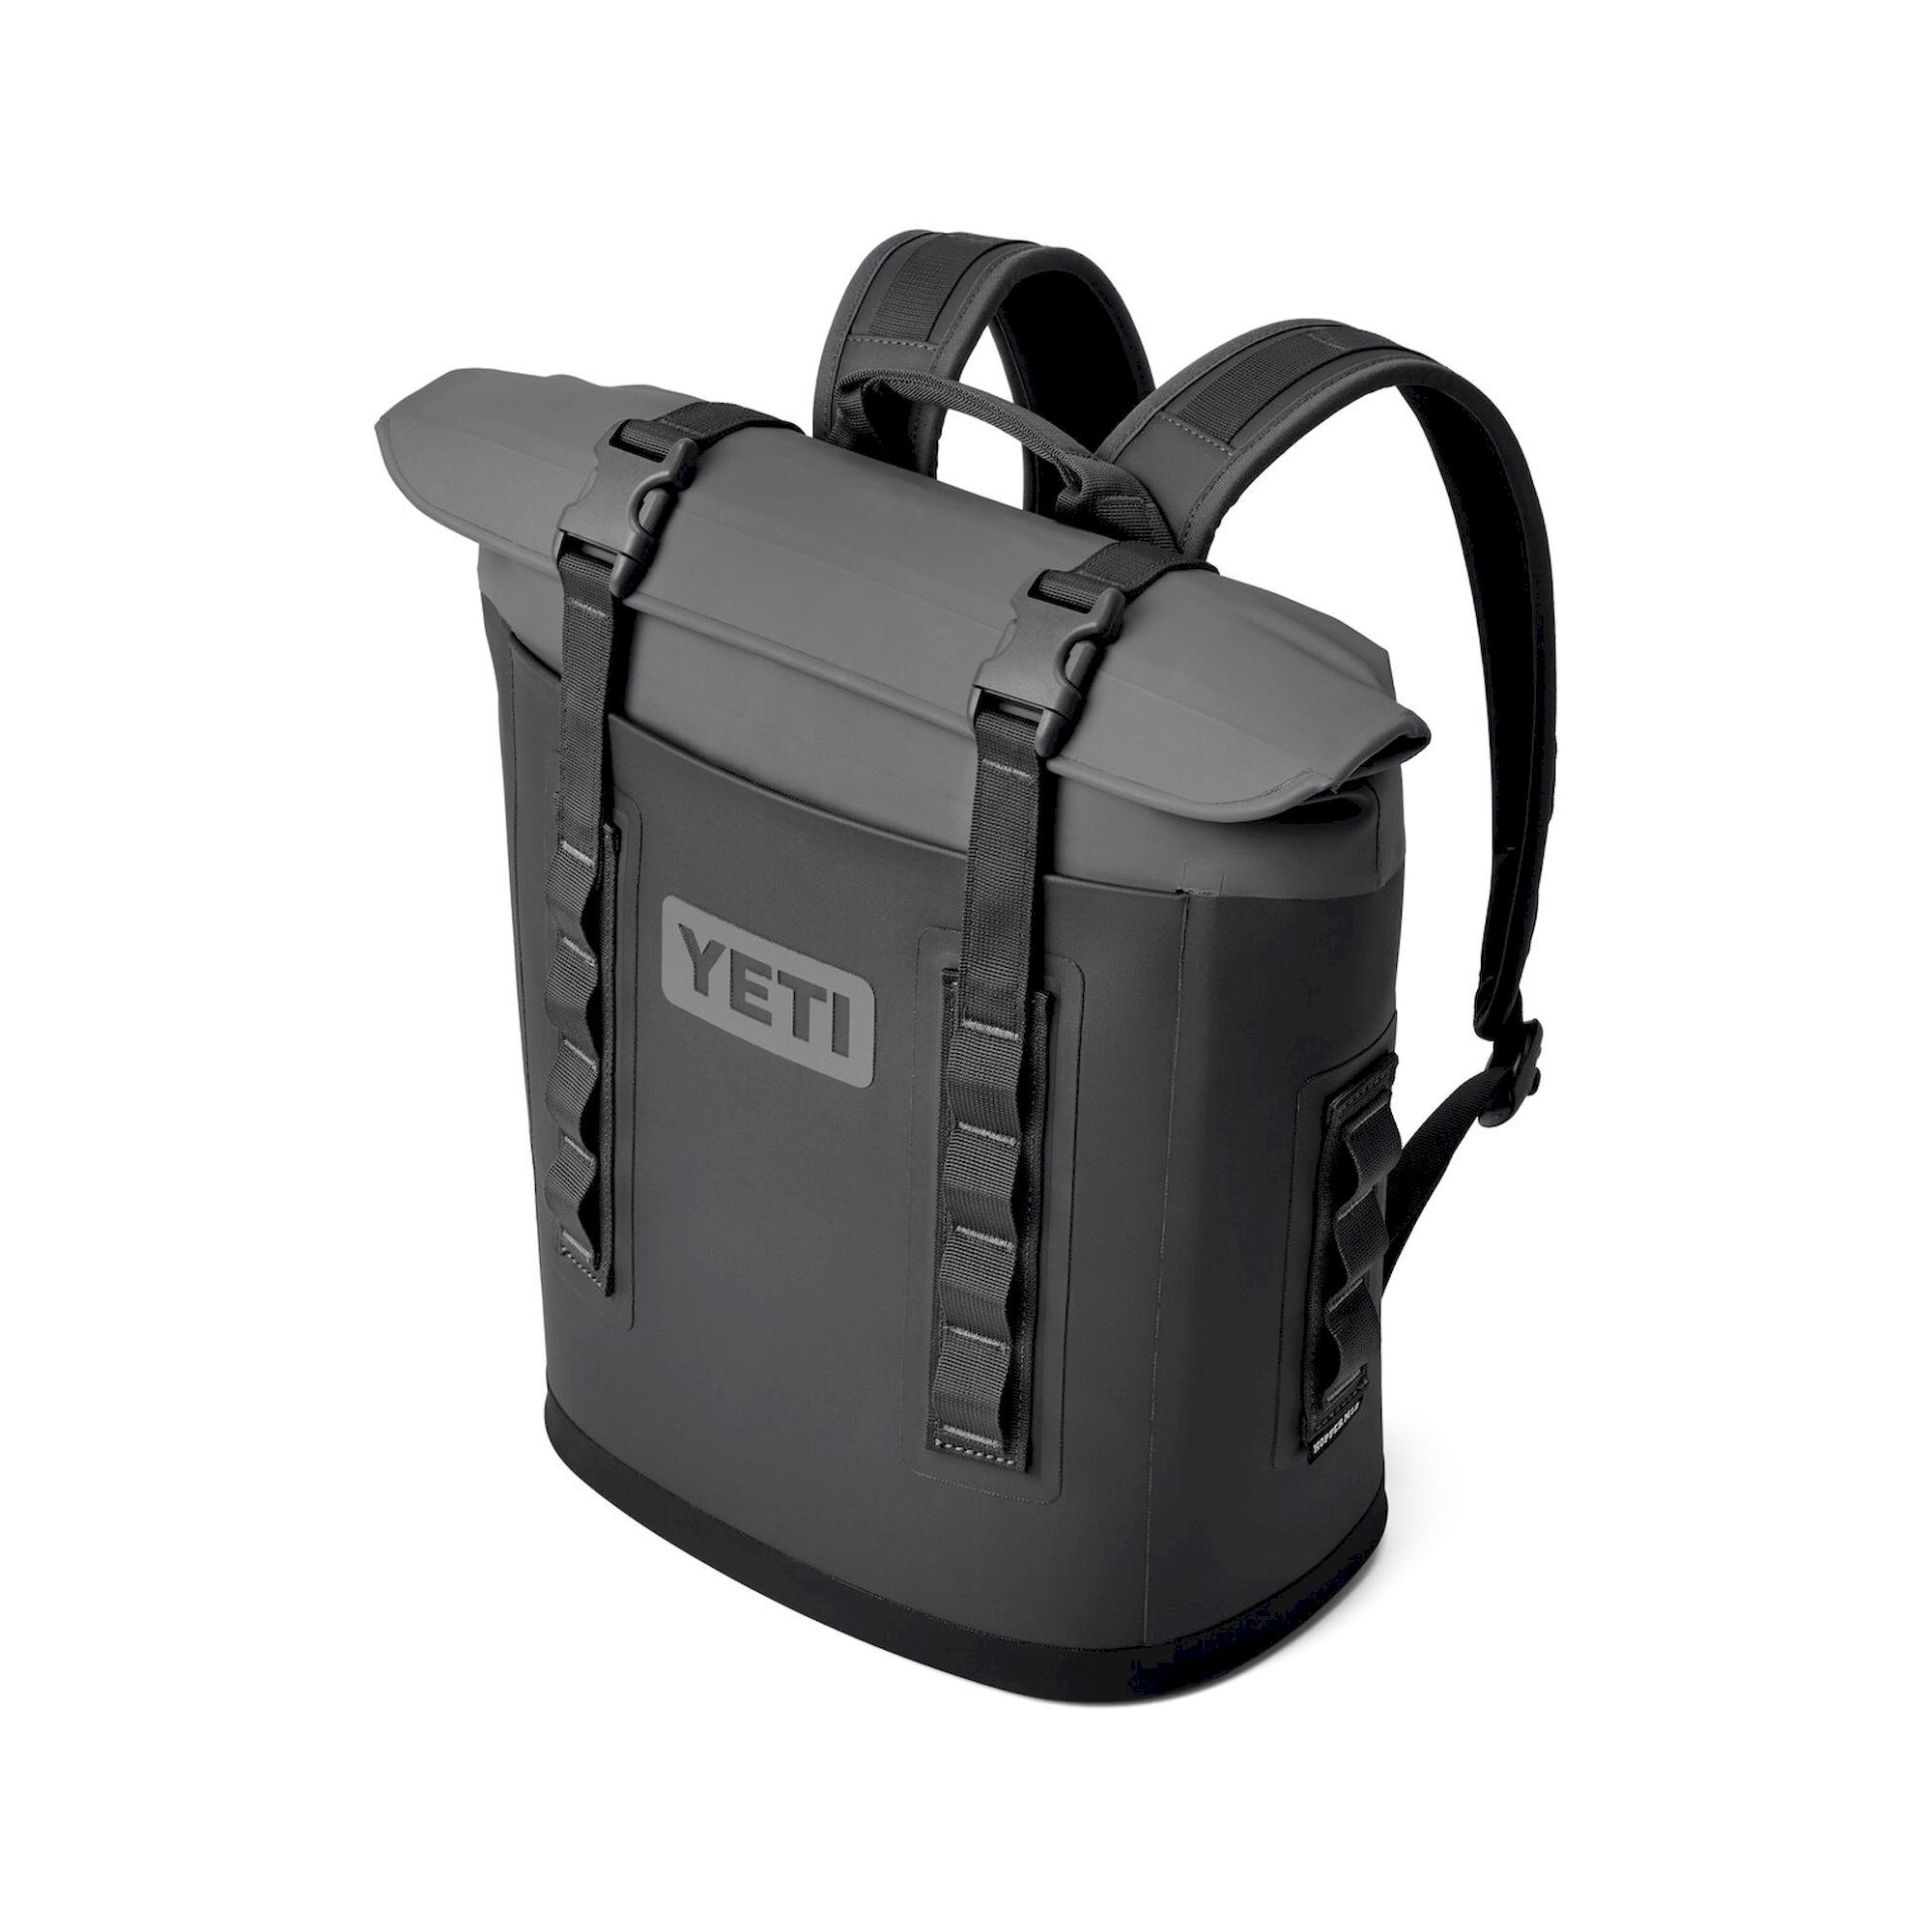 Yeti Hopper Soft Backpack Cooler - Camping koelbox | Hardloop